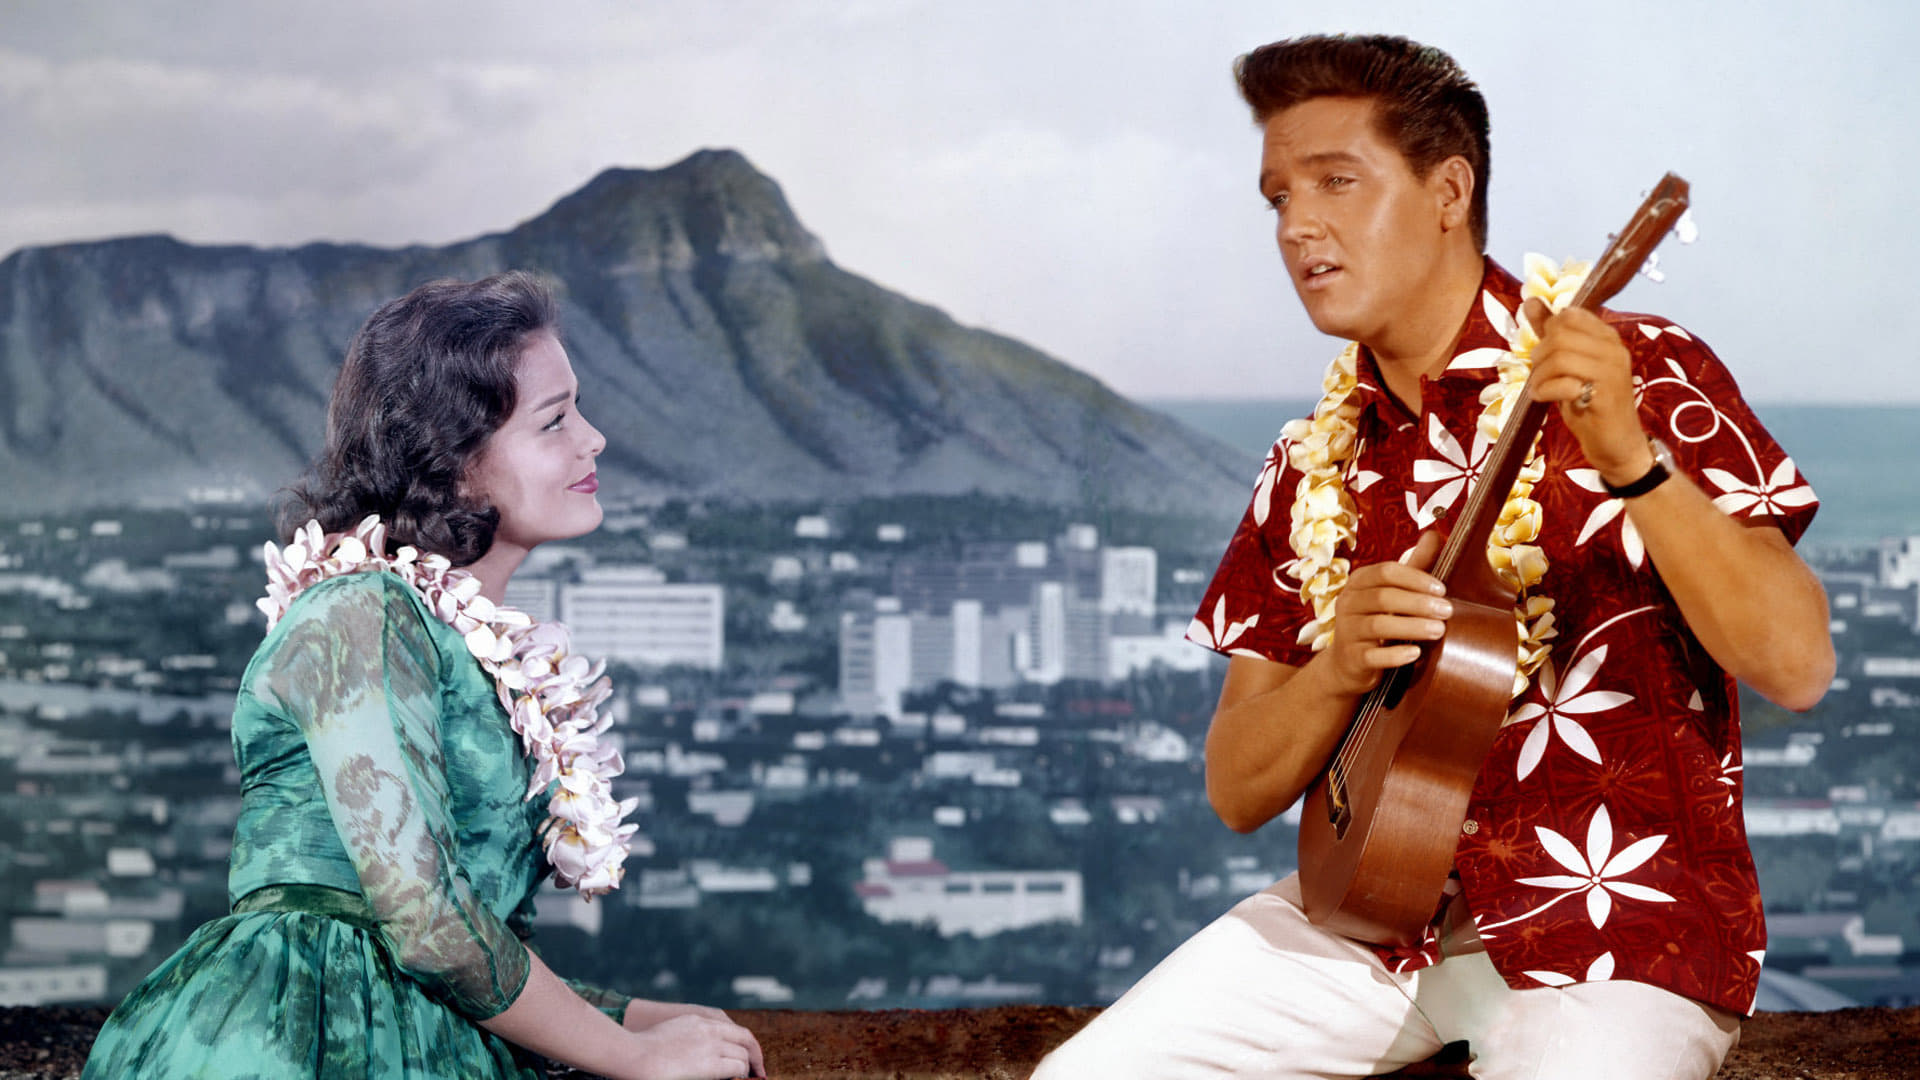 دانلود فیلم Blue Hawaii 1961